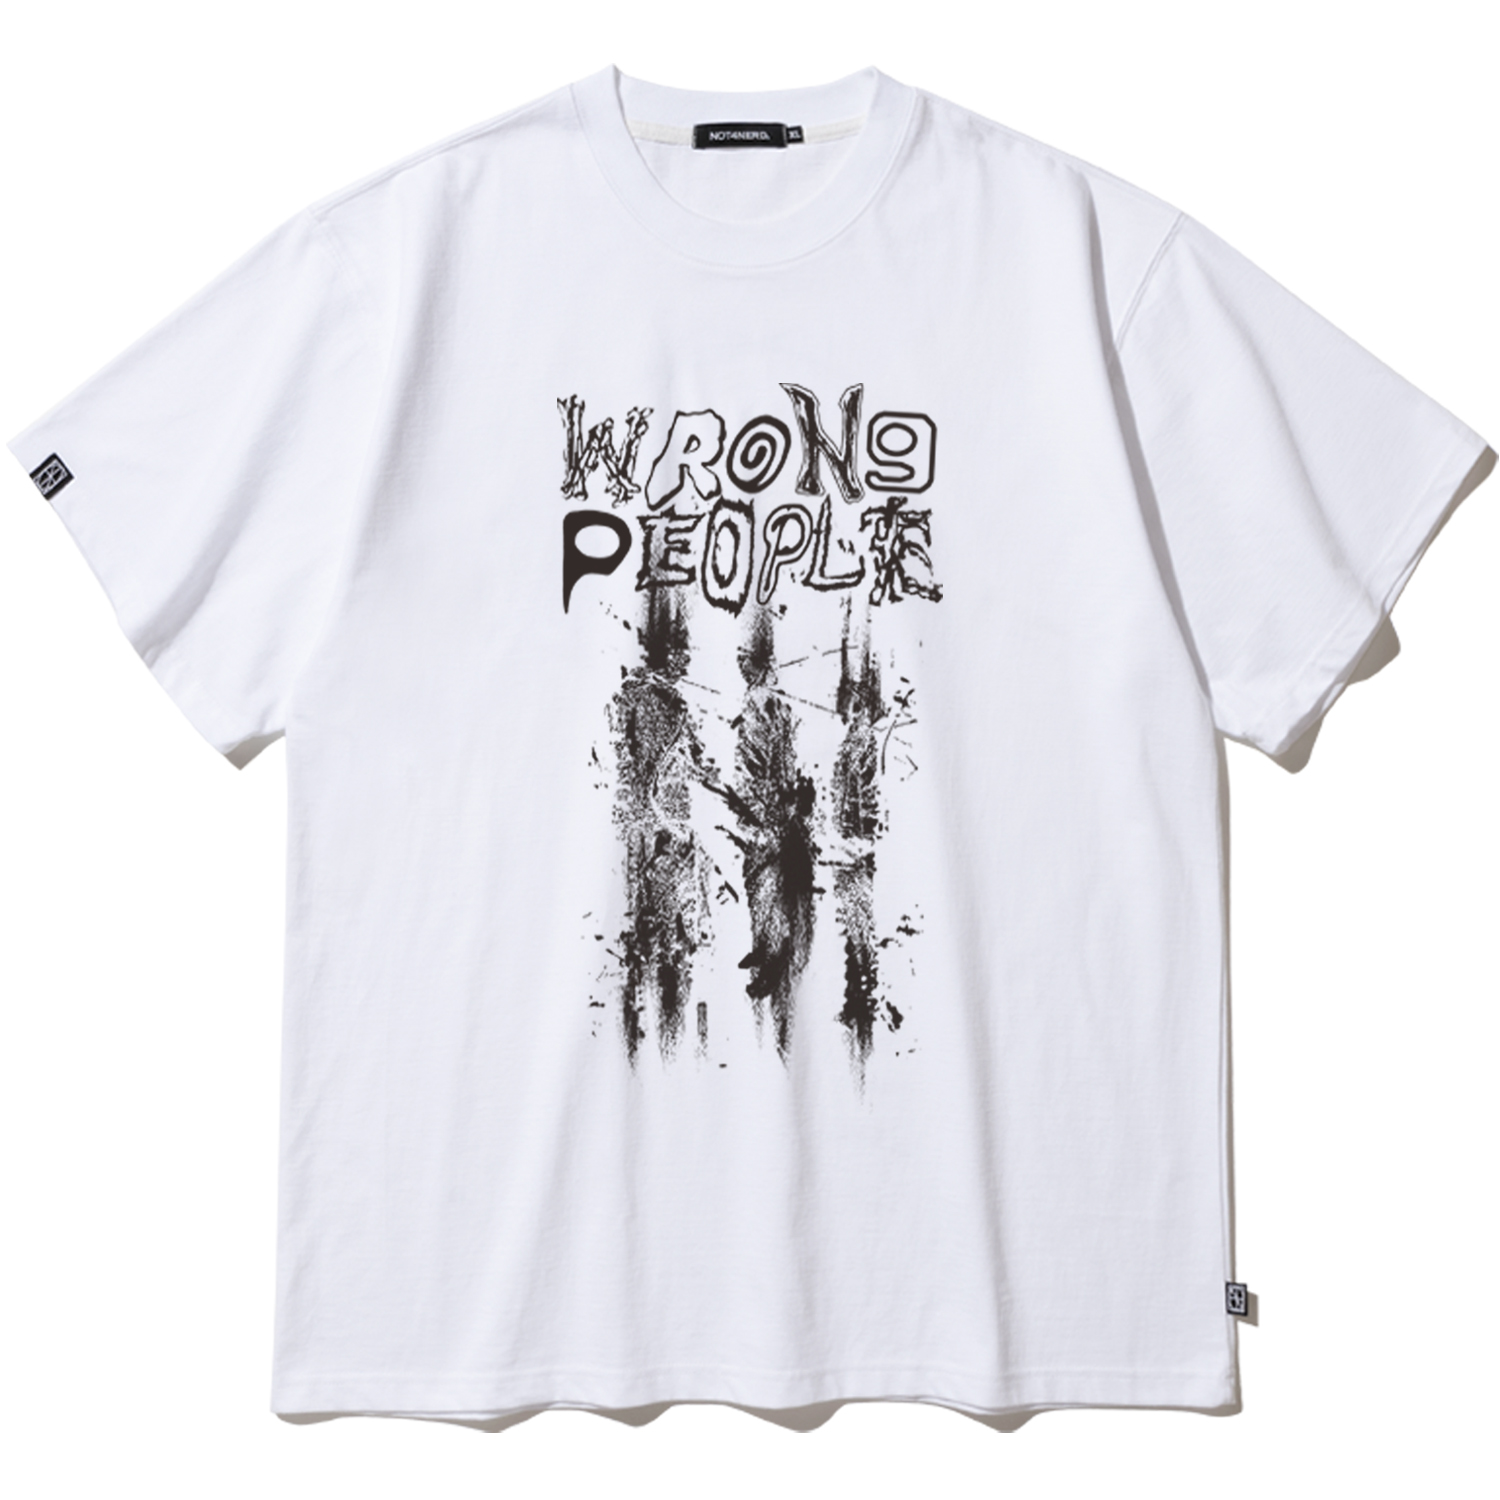 Wrong People T-Shirts - White,NOT4NERD